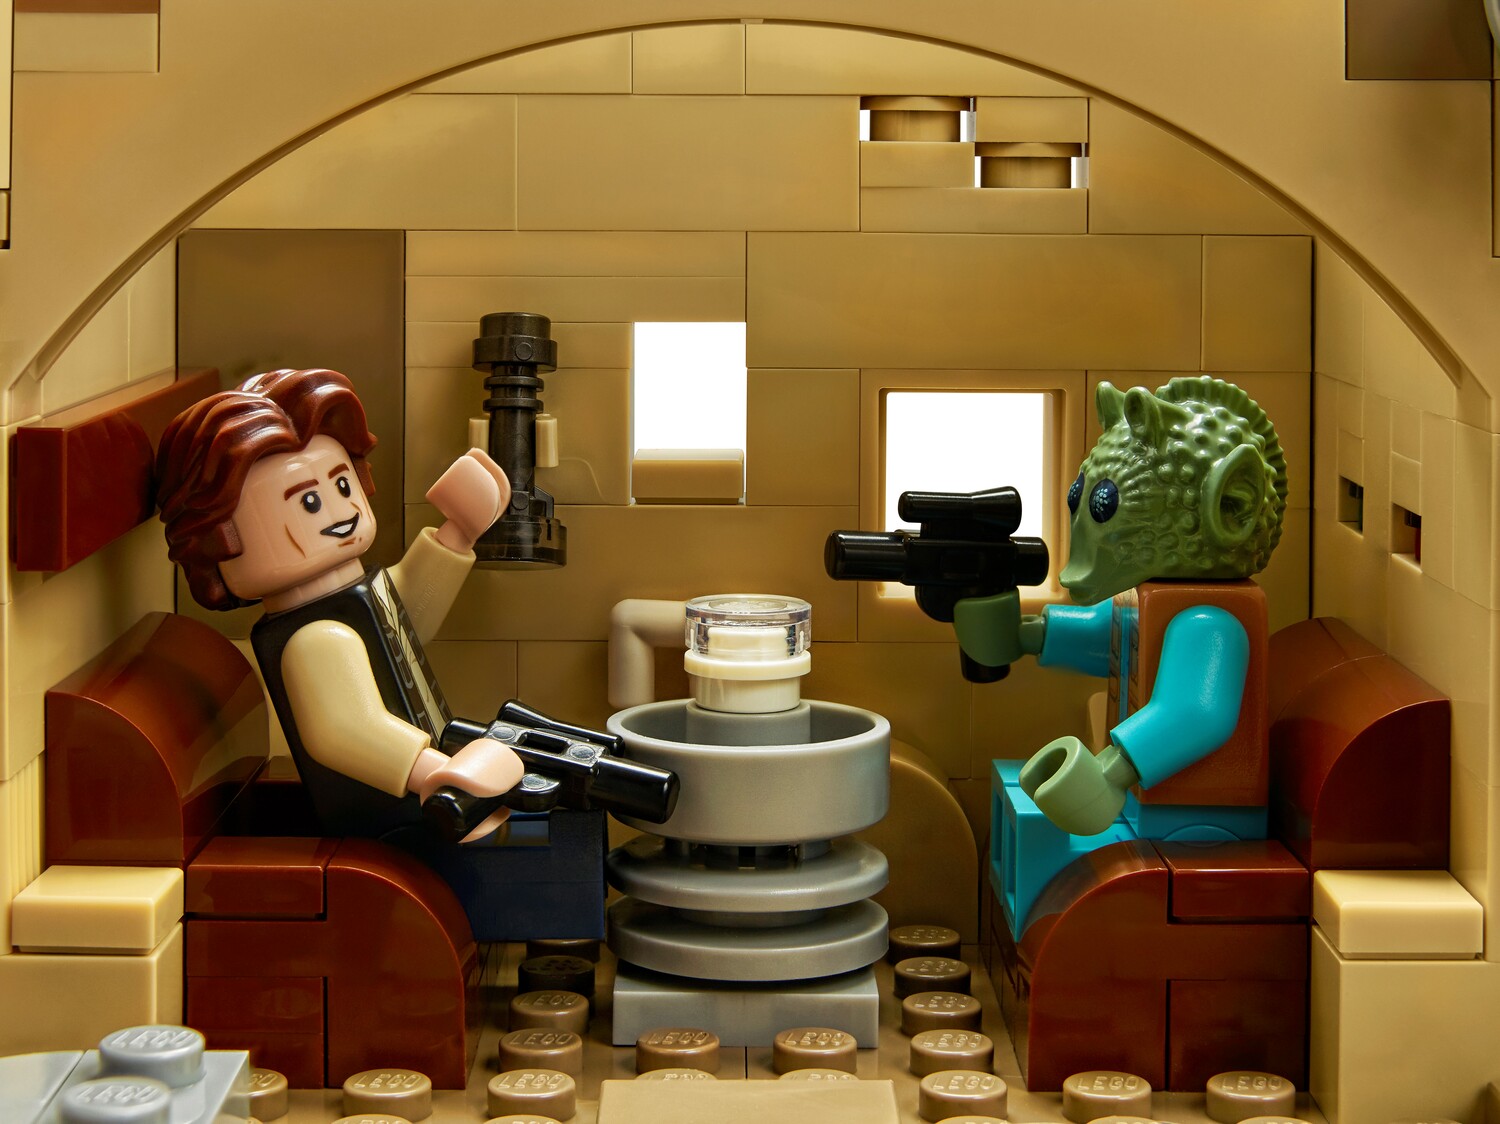 LEGO Star Wars: Mos Eisley Cantina